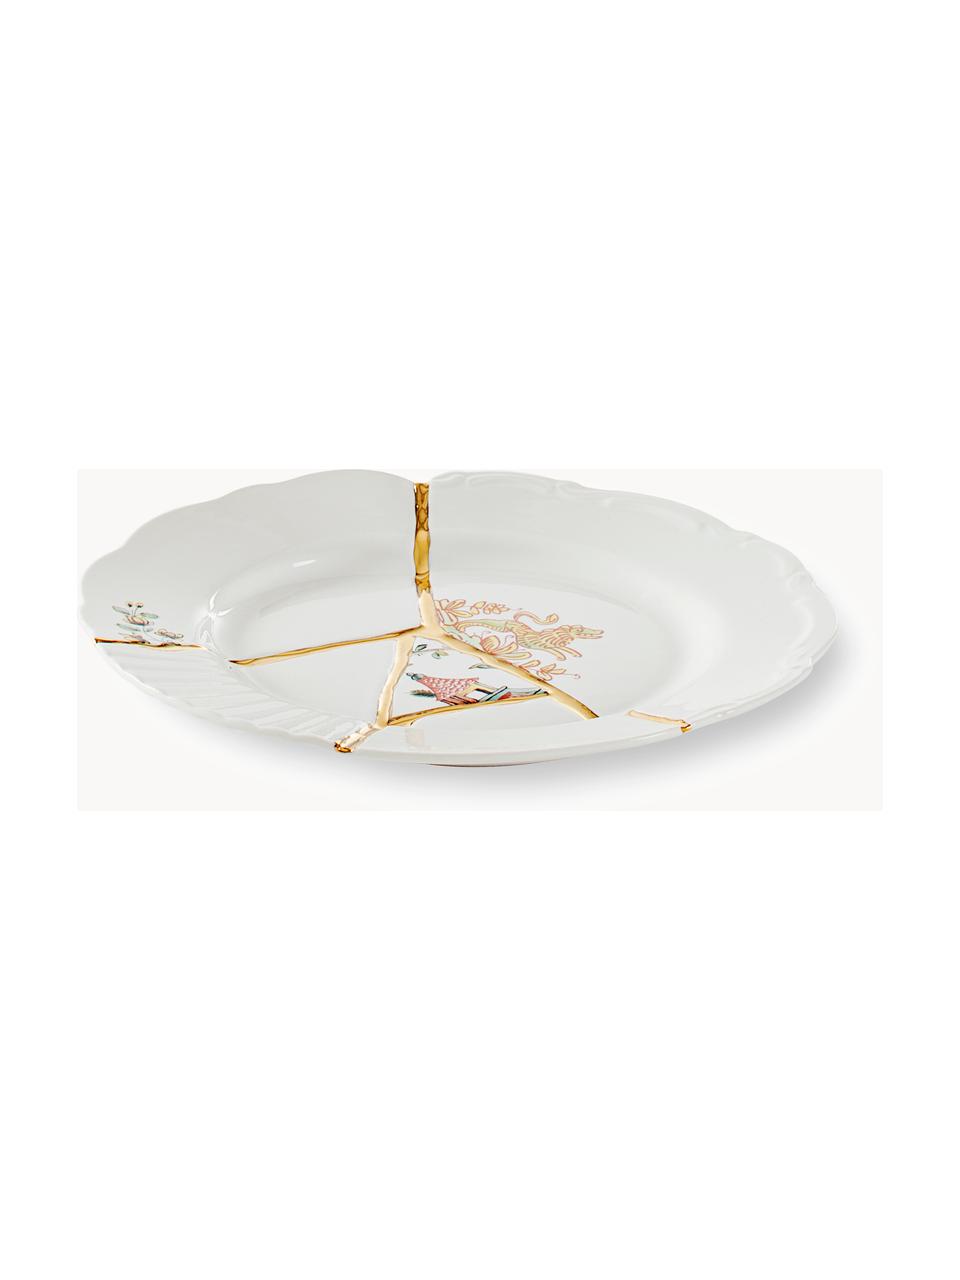 Designer porseleinen ontbijtbord Kintsugi, Decoratie: goudkleurig, Wit, goudkleurig, Ø 21 cm